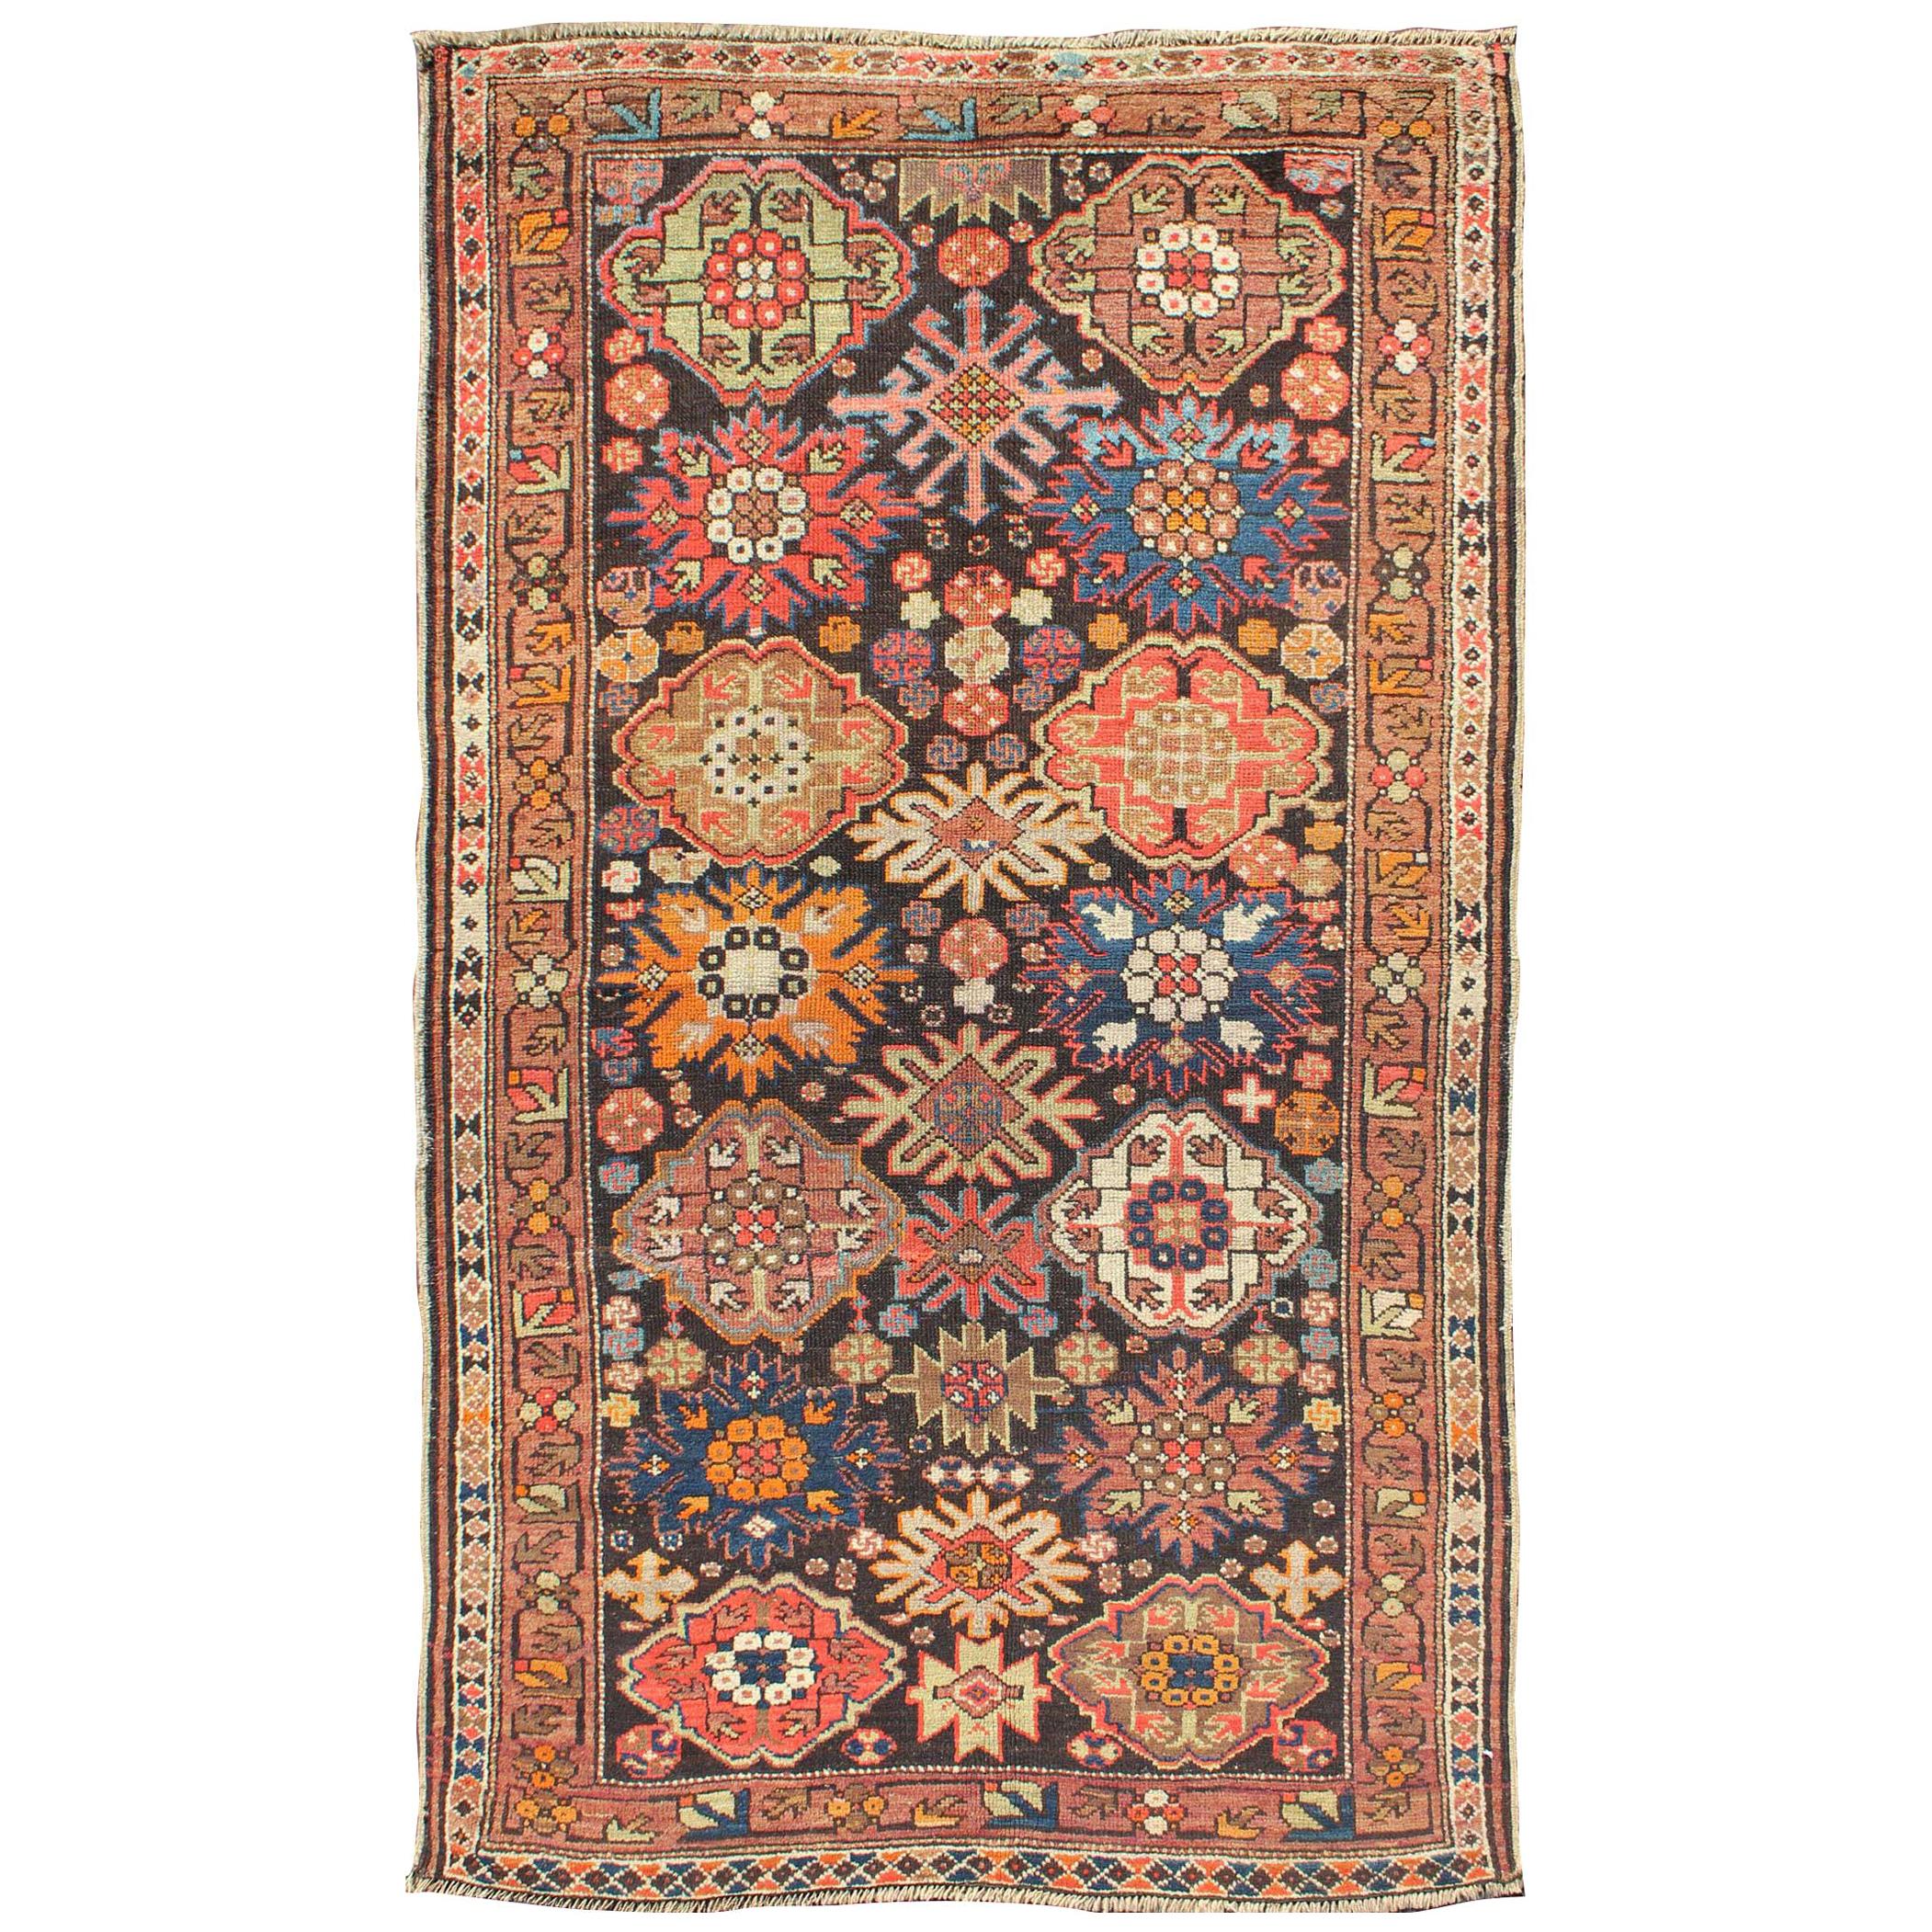 Antiker kaukasischer Teppich mit mehrfarbigem All-Over-Muster in großem All-Over-Muster